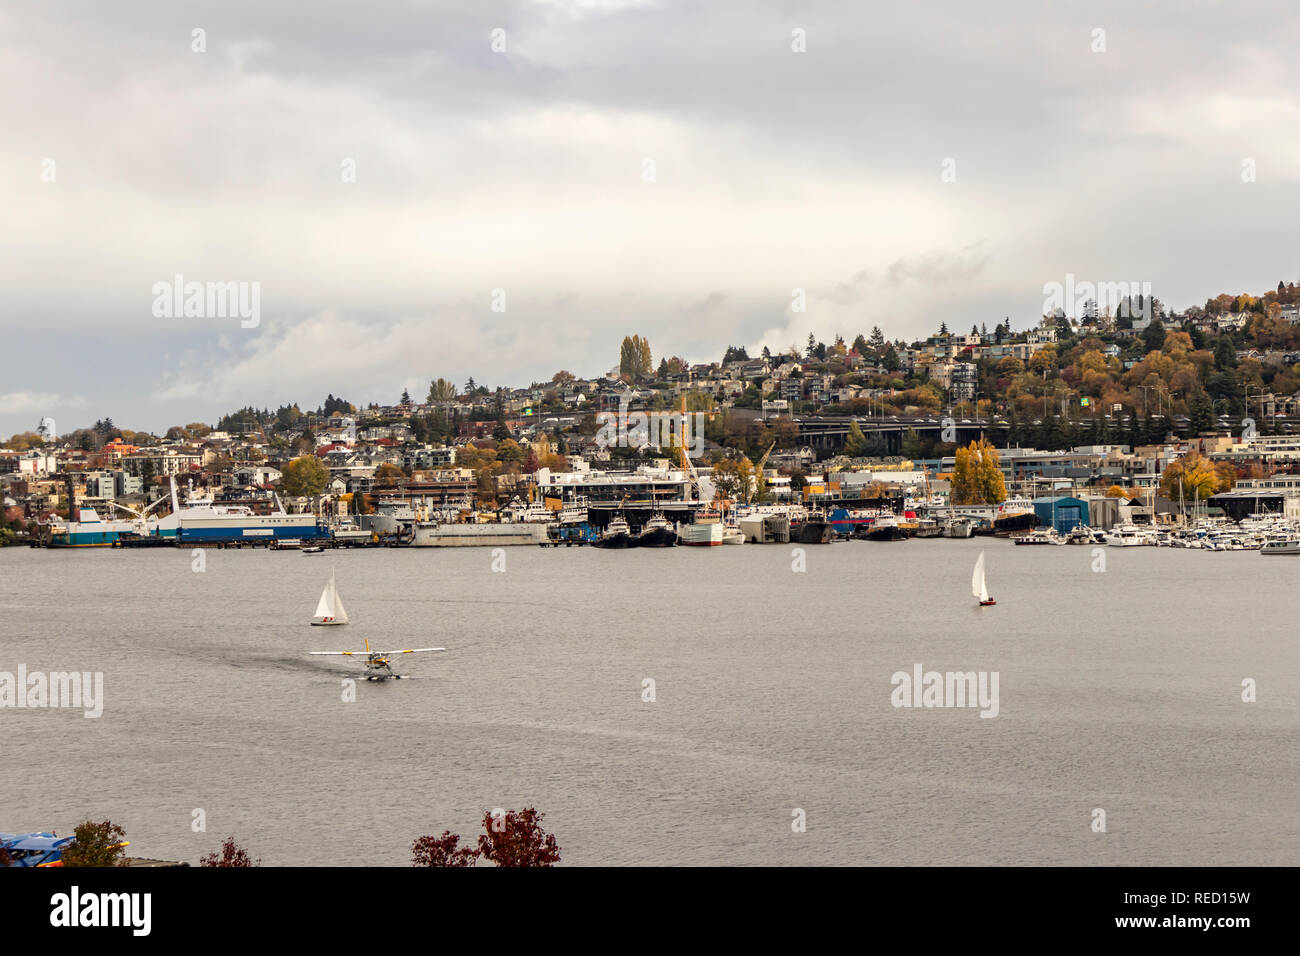 A Seaplane/Water Taxi landing on Lake Union, Seattle, Washington State, USA. Stock Photo